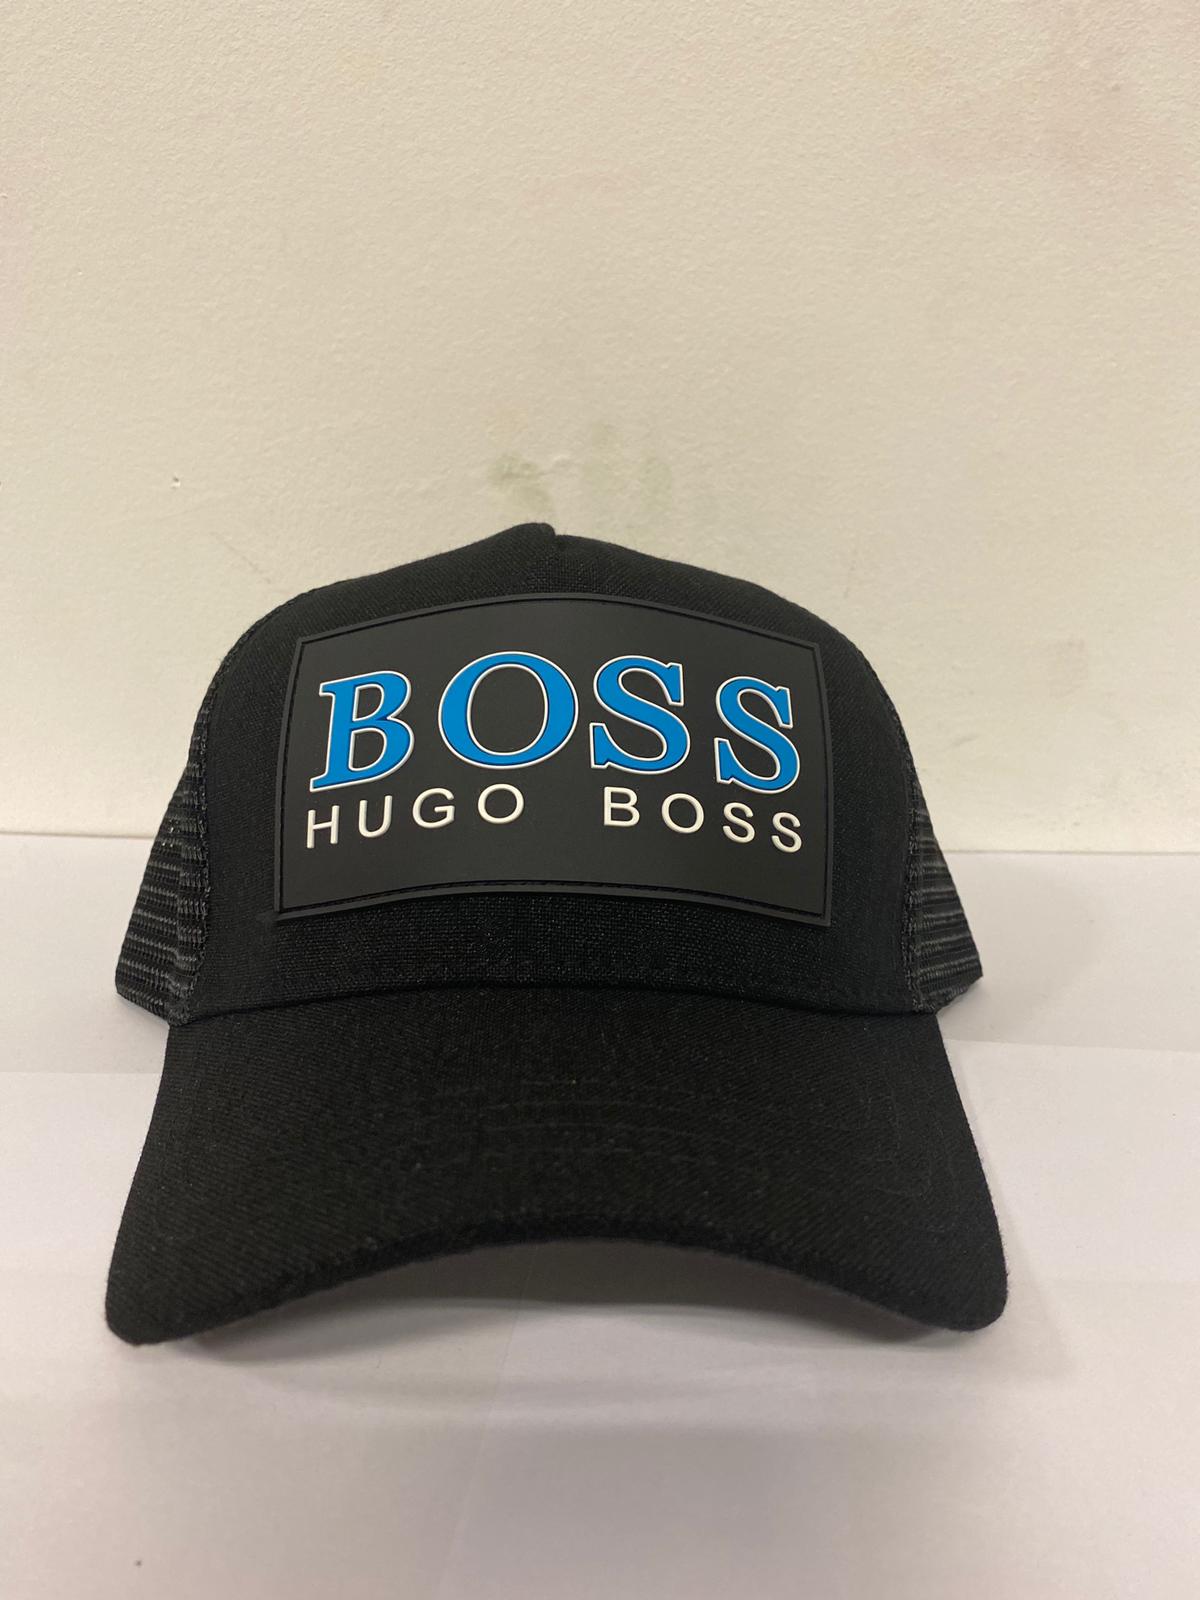 hugo boss cap price